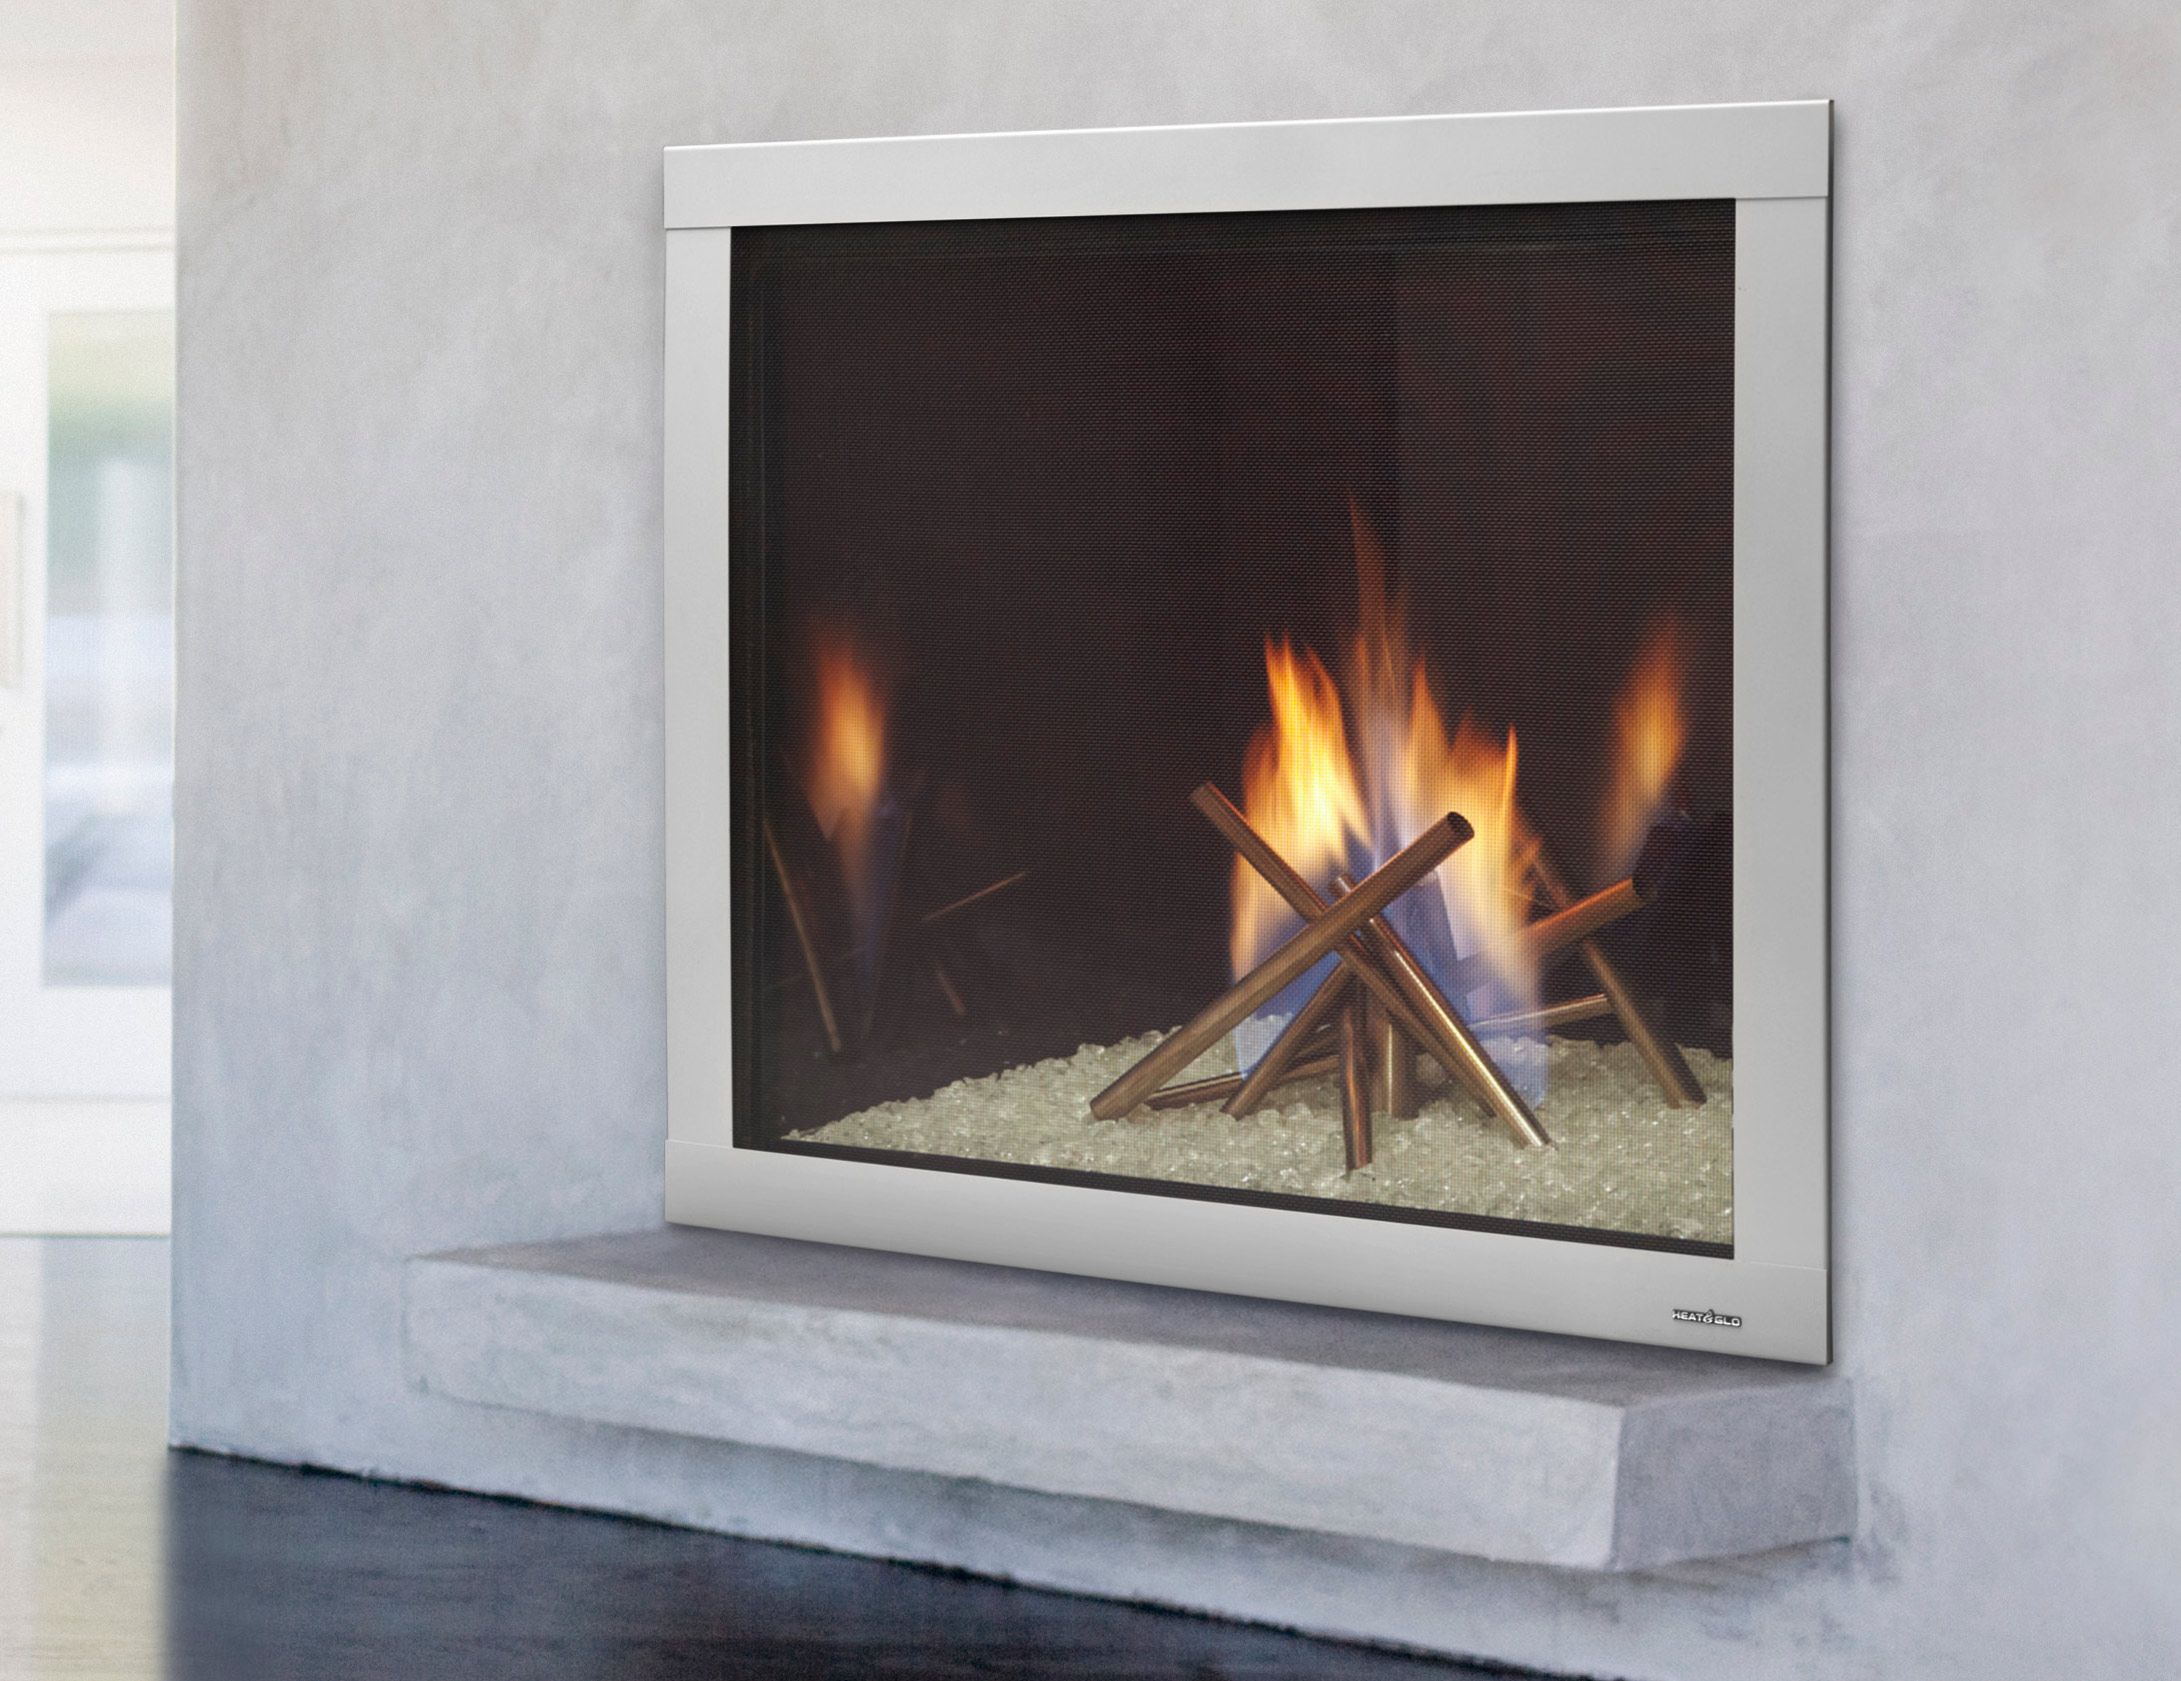 Mendota Fireplace Inserts Lovely Modern Fireplace Inserts Charming Fireplace